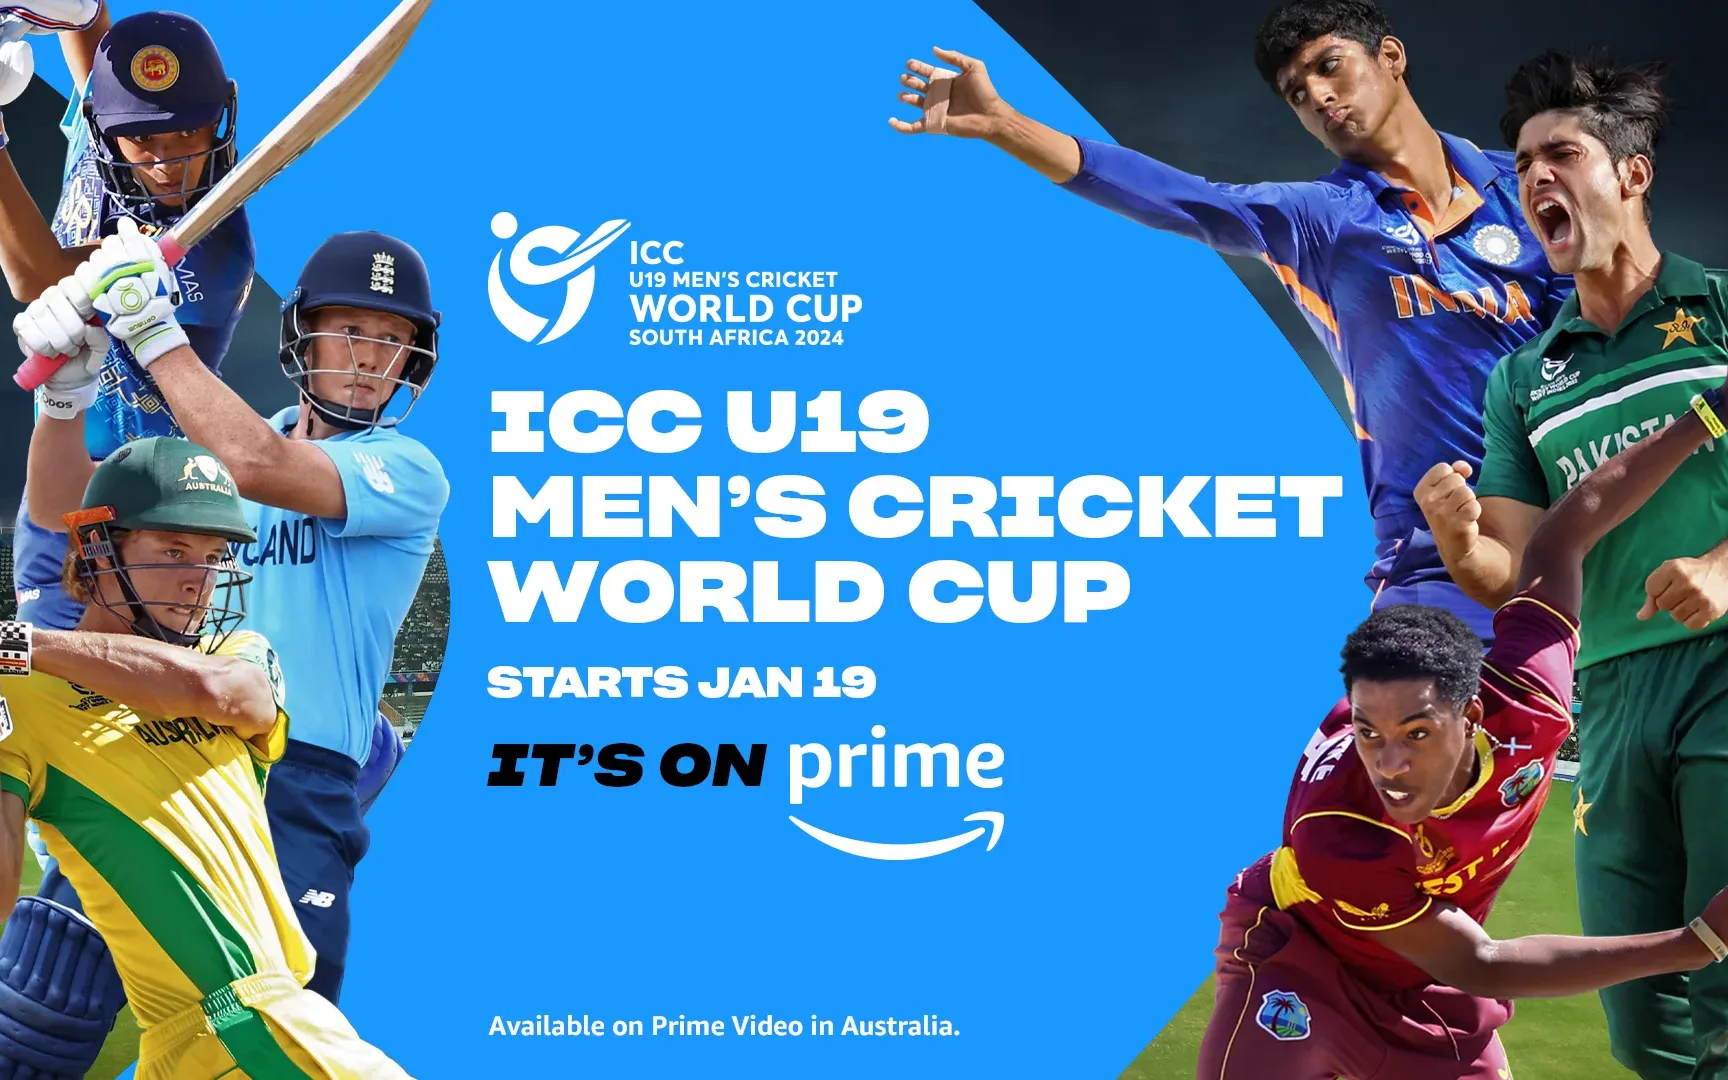 U19 Men's World Cricket Cup on Prime Video